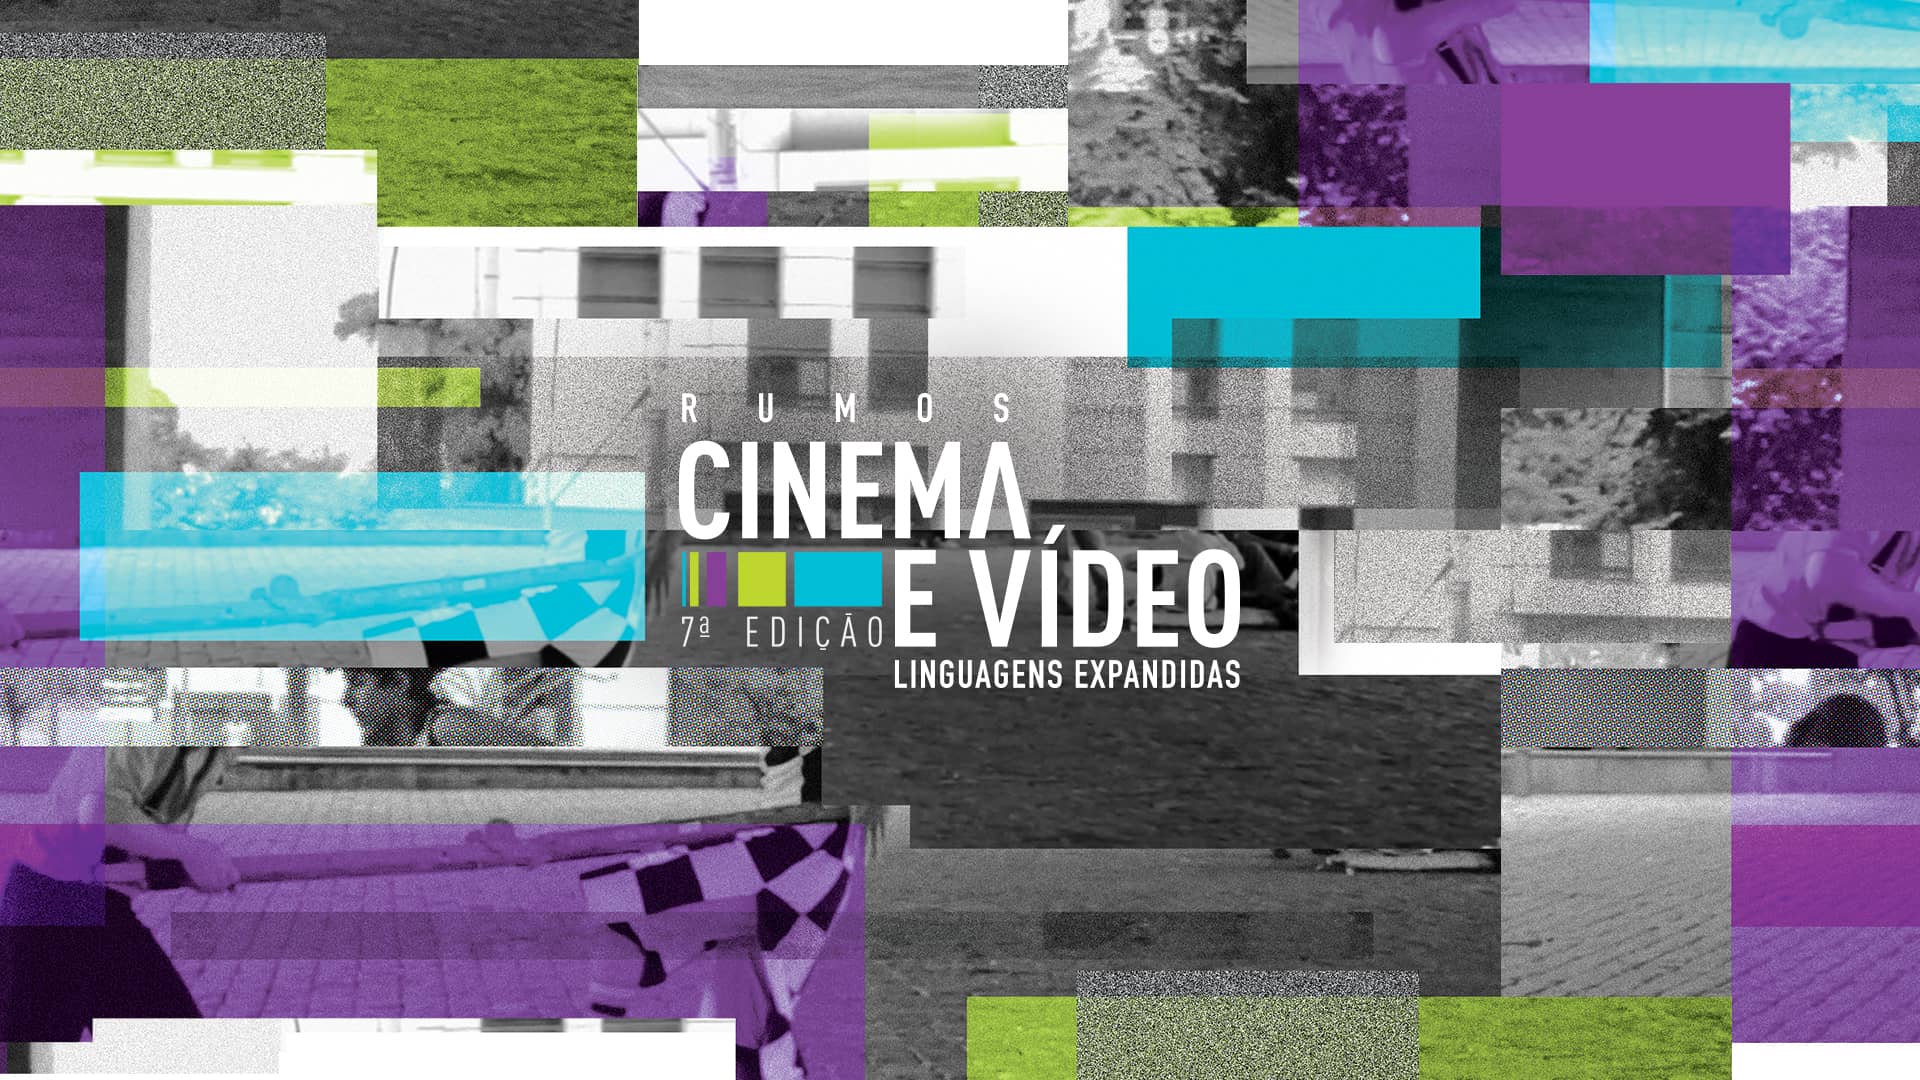 Rumos Cinema e Video